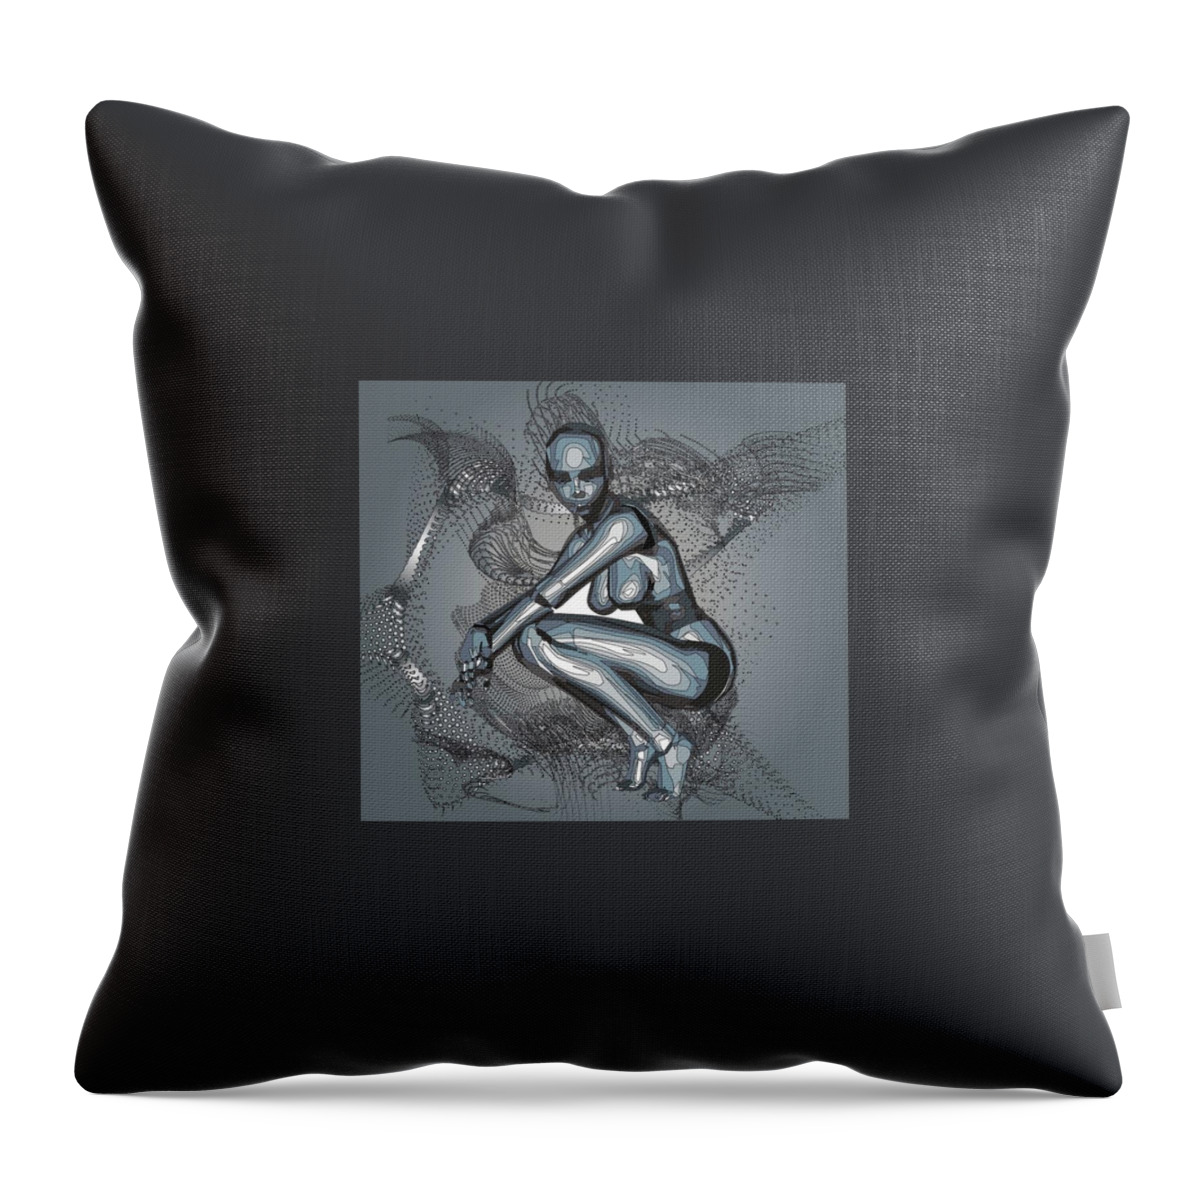 Robot Throw Pillow featuring the digital art Warrior of the matrix by Sarah Remer